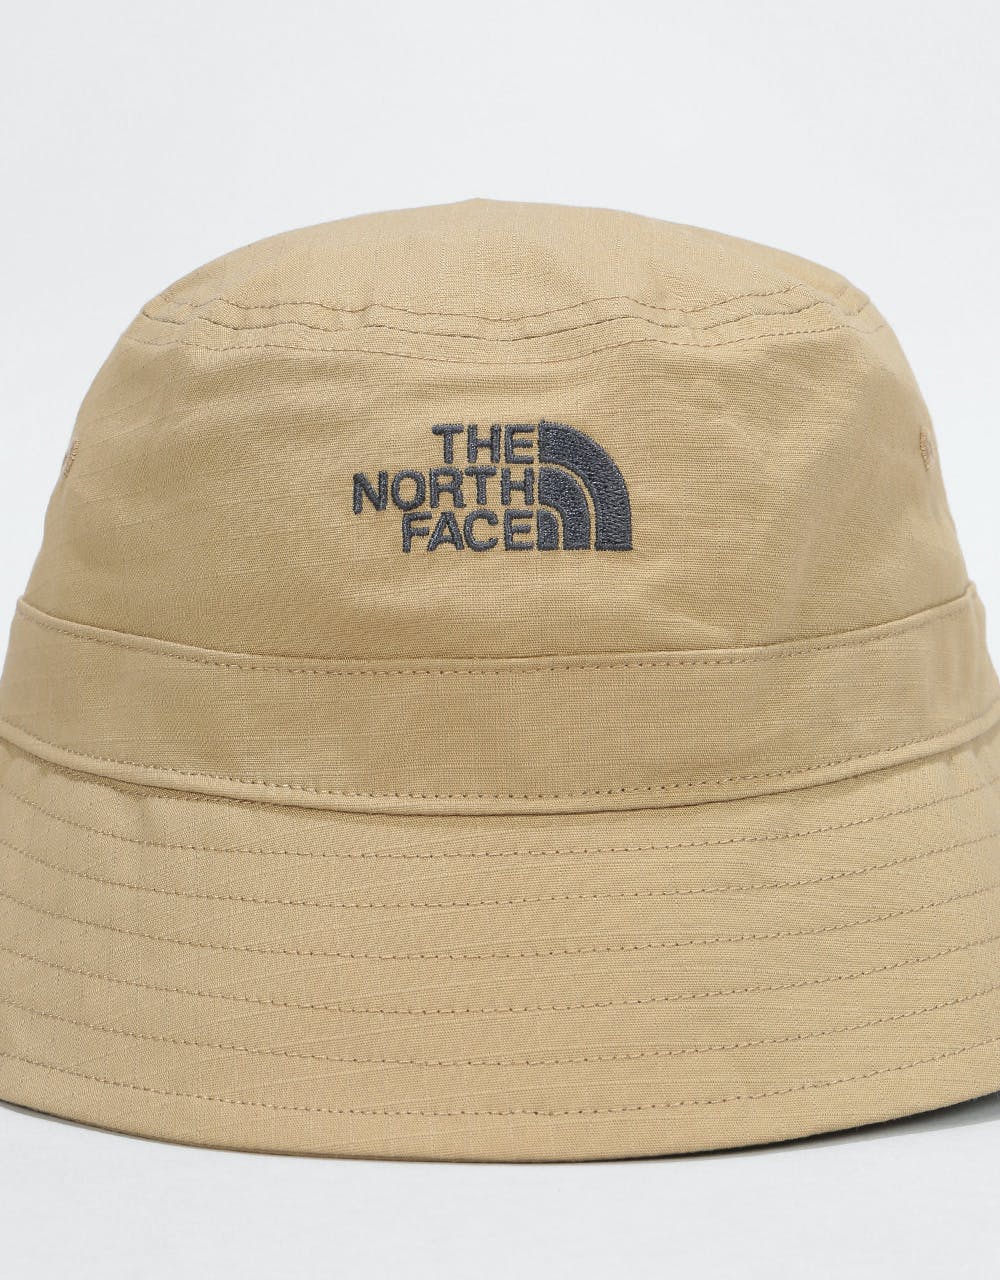 The North Face Cotton Bucket Hat - Kelp Tan